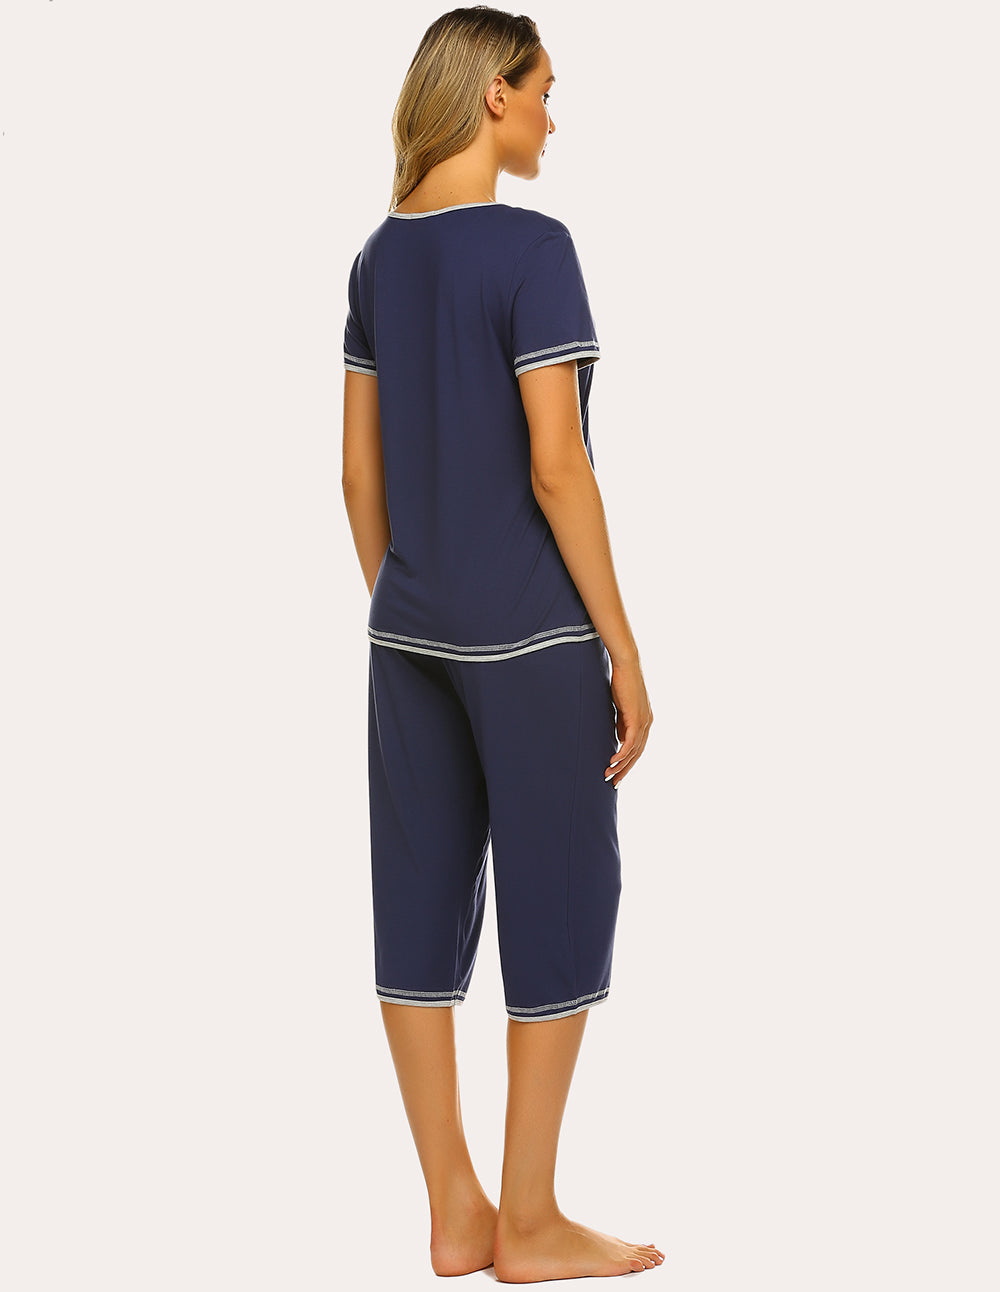 Ekouaer Tops and Capri Pants 2 Piece Pajamas Set